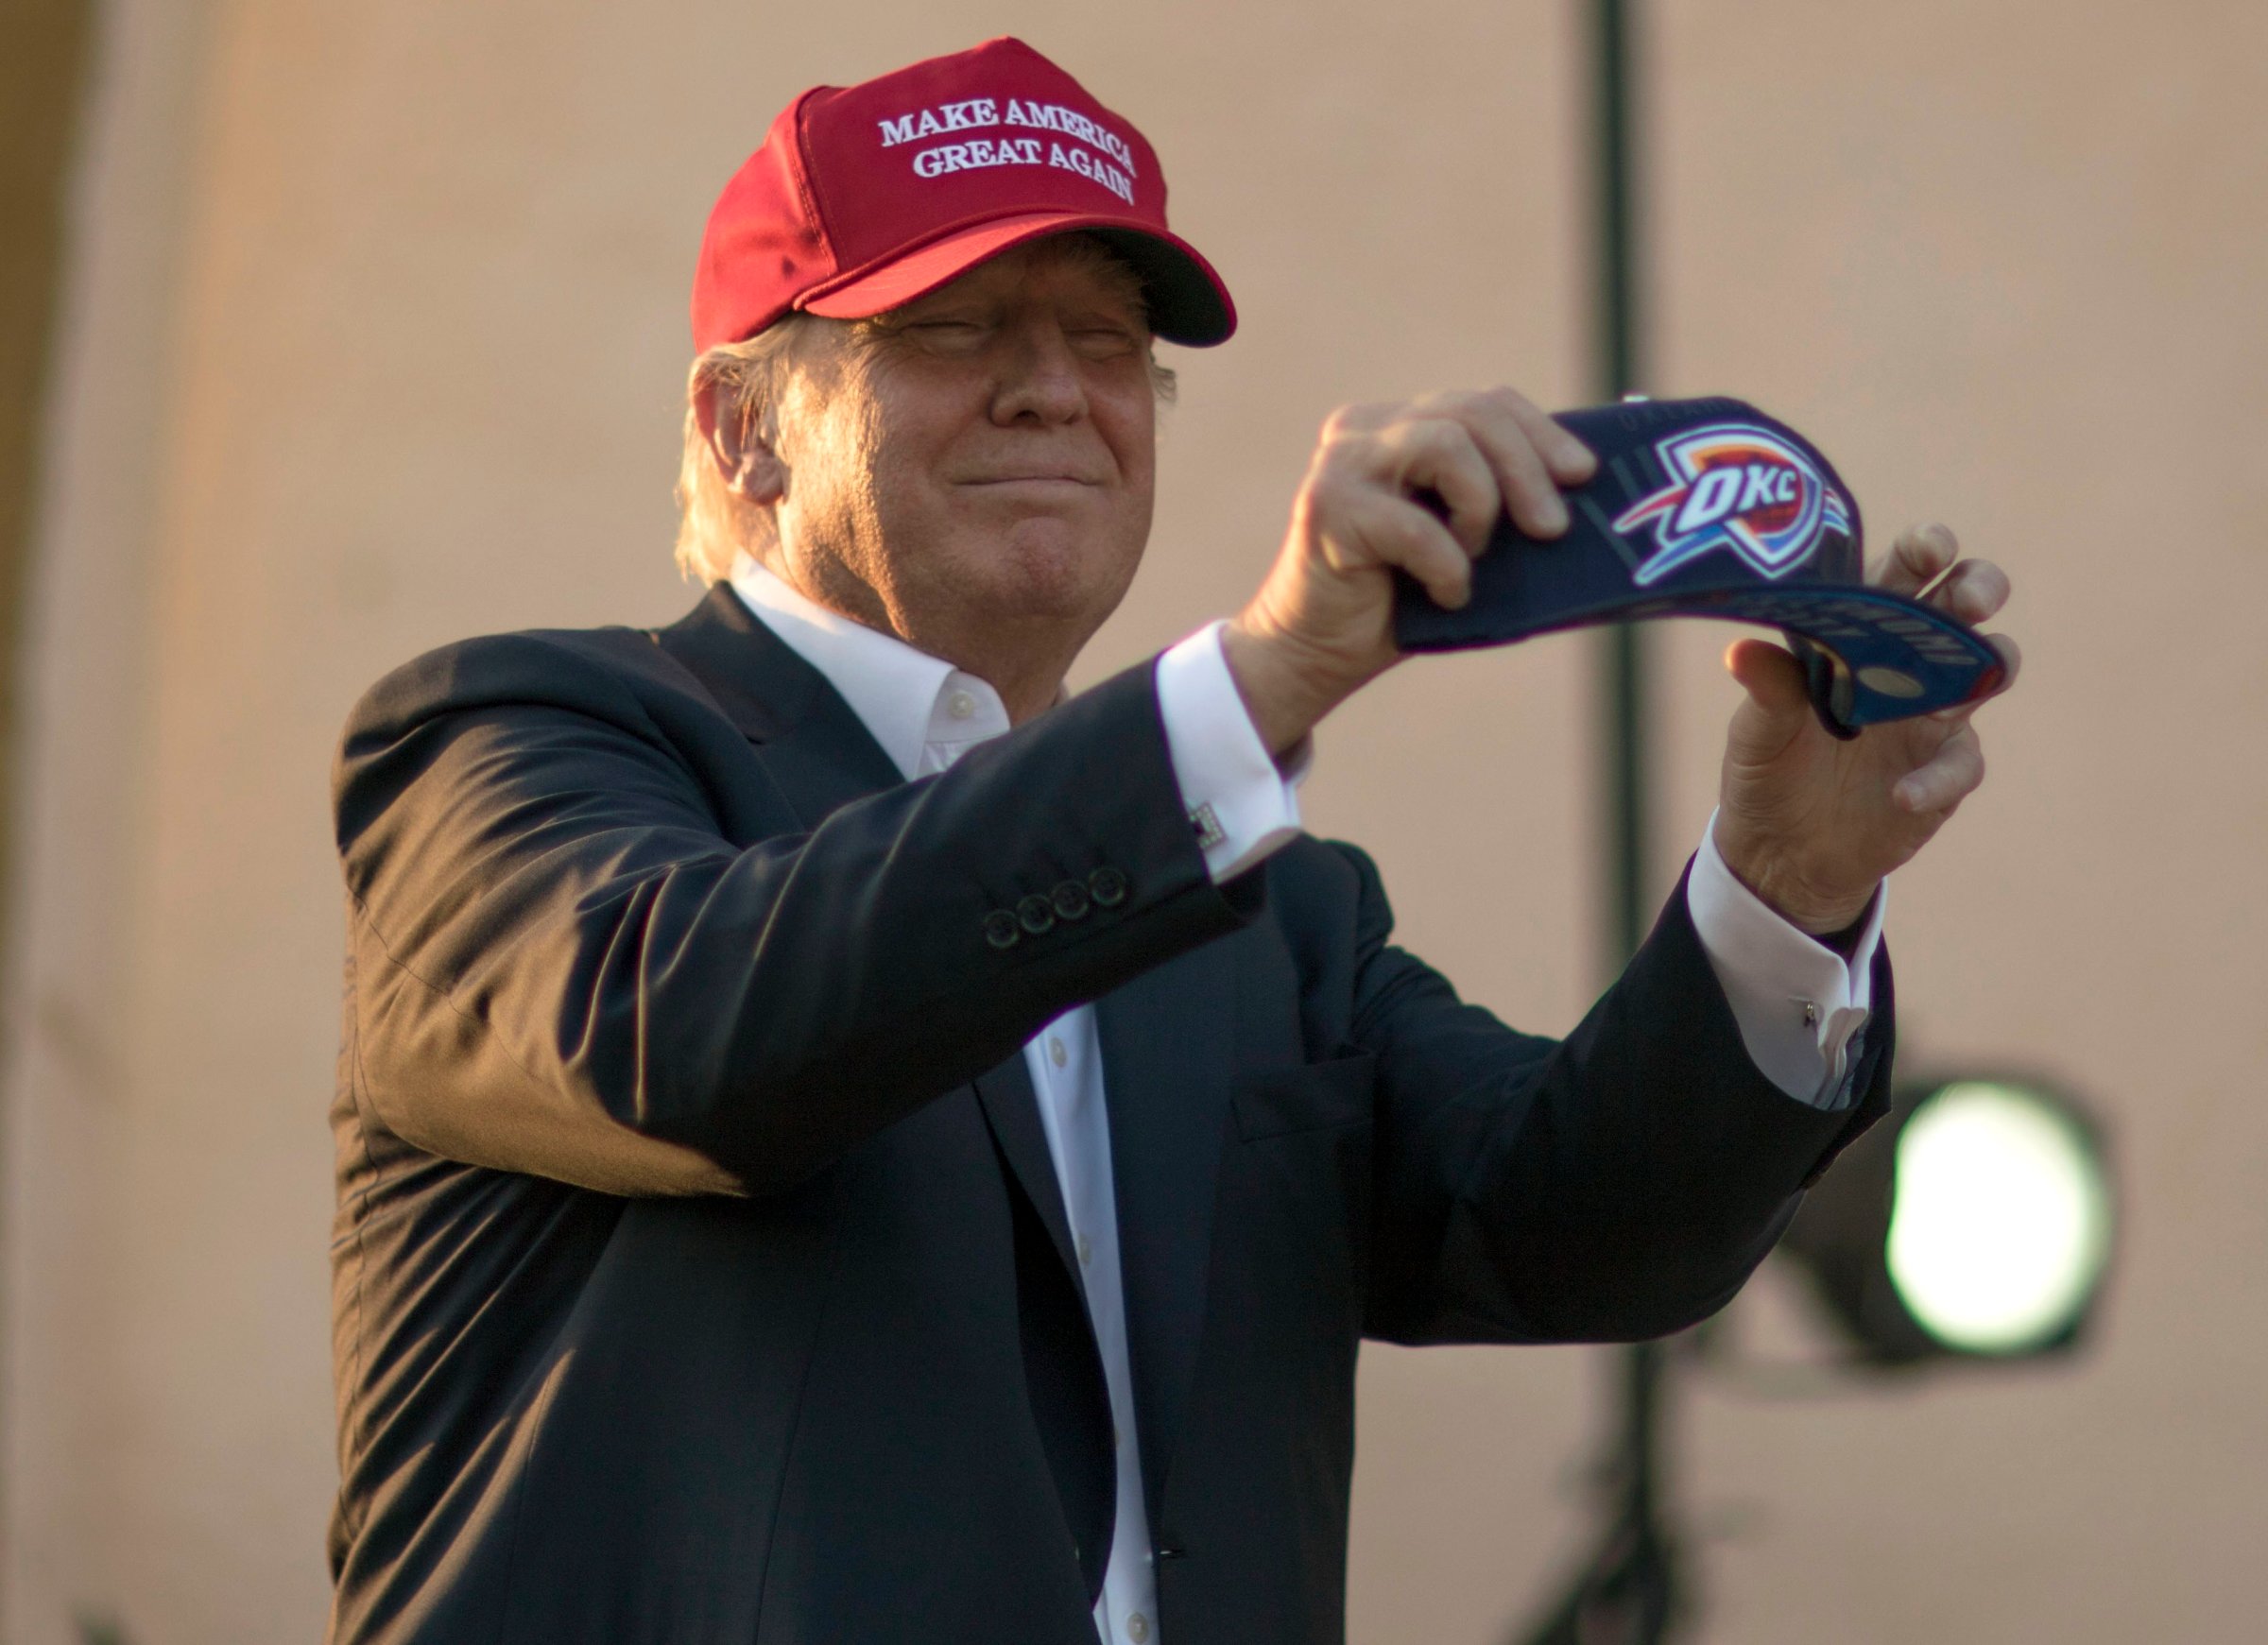 Donald Trump Hat